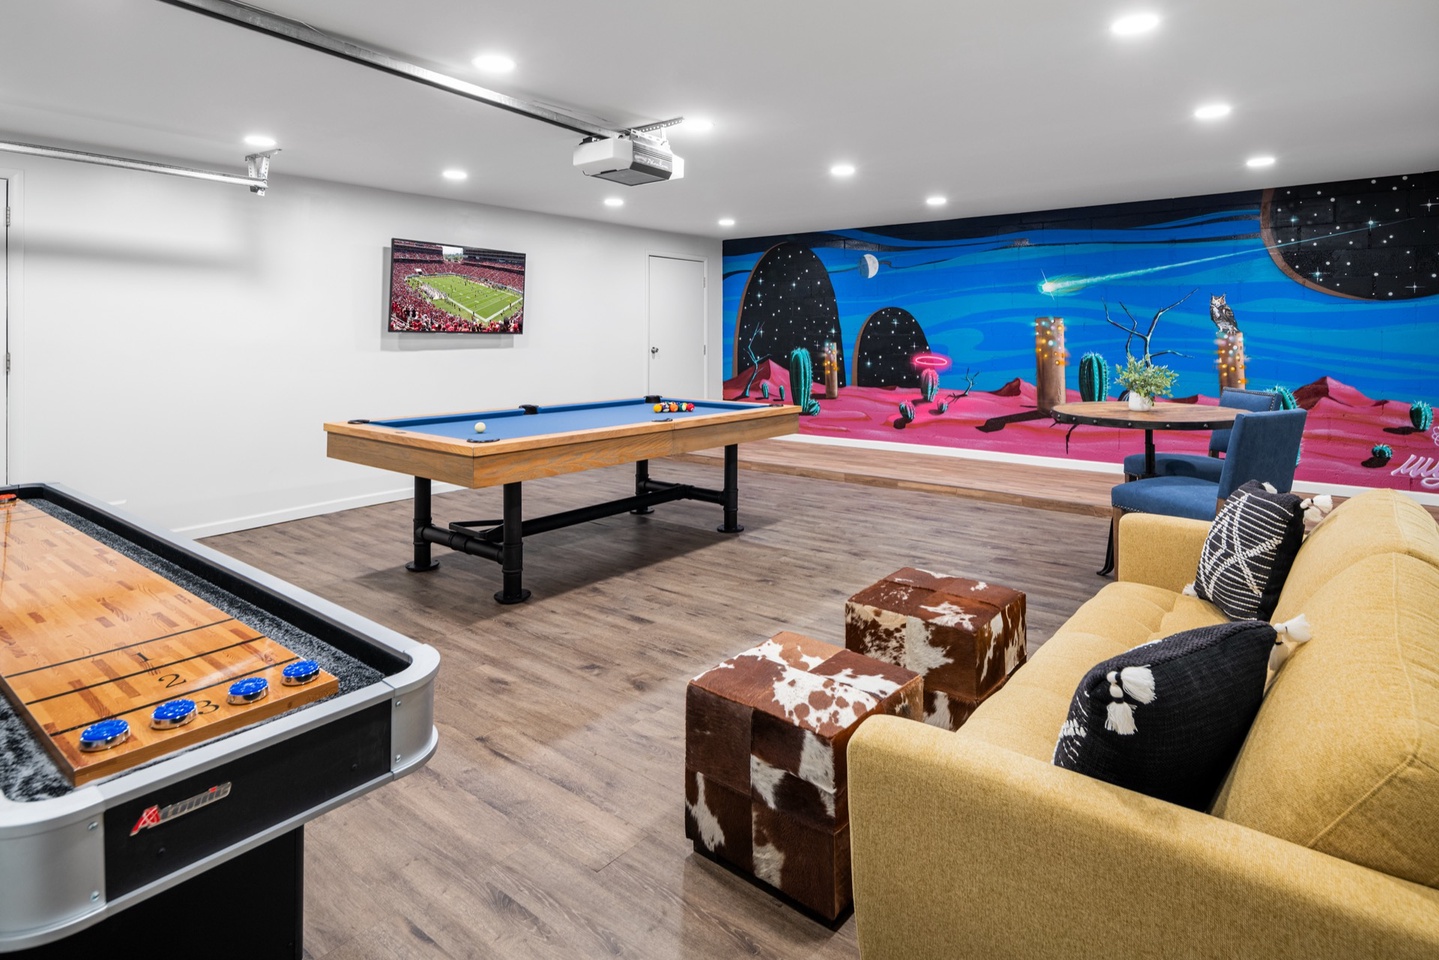 Pool table, shuffle board, wall TV, seating, and custom art backdrop